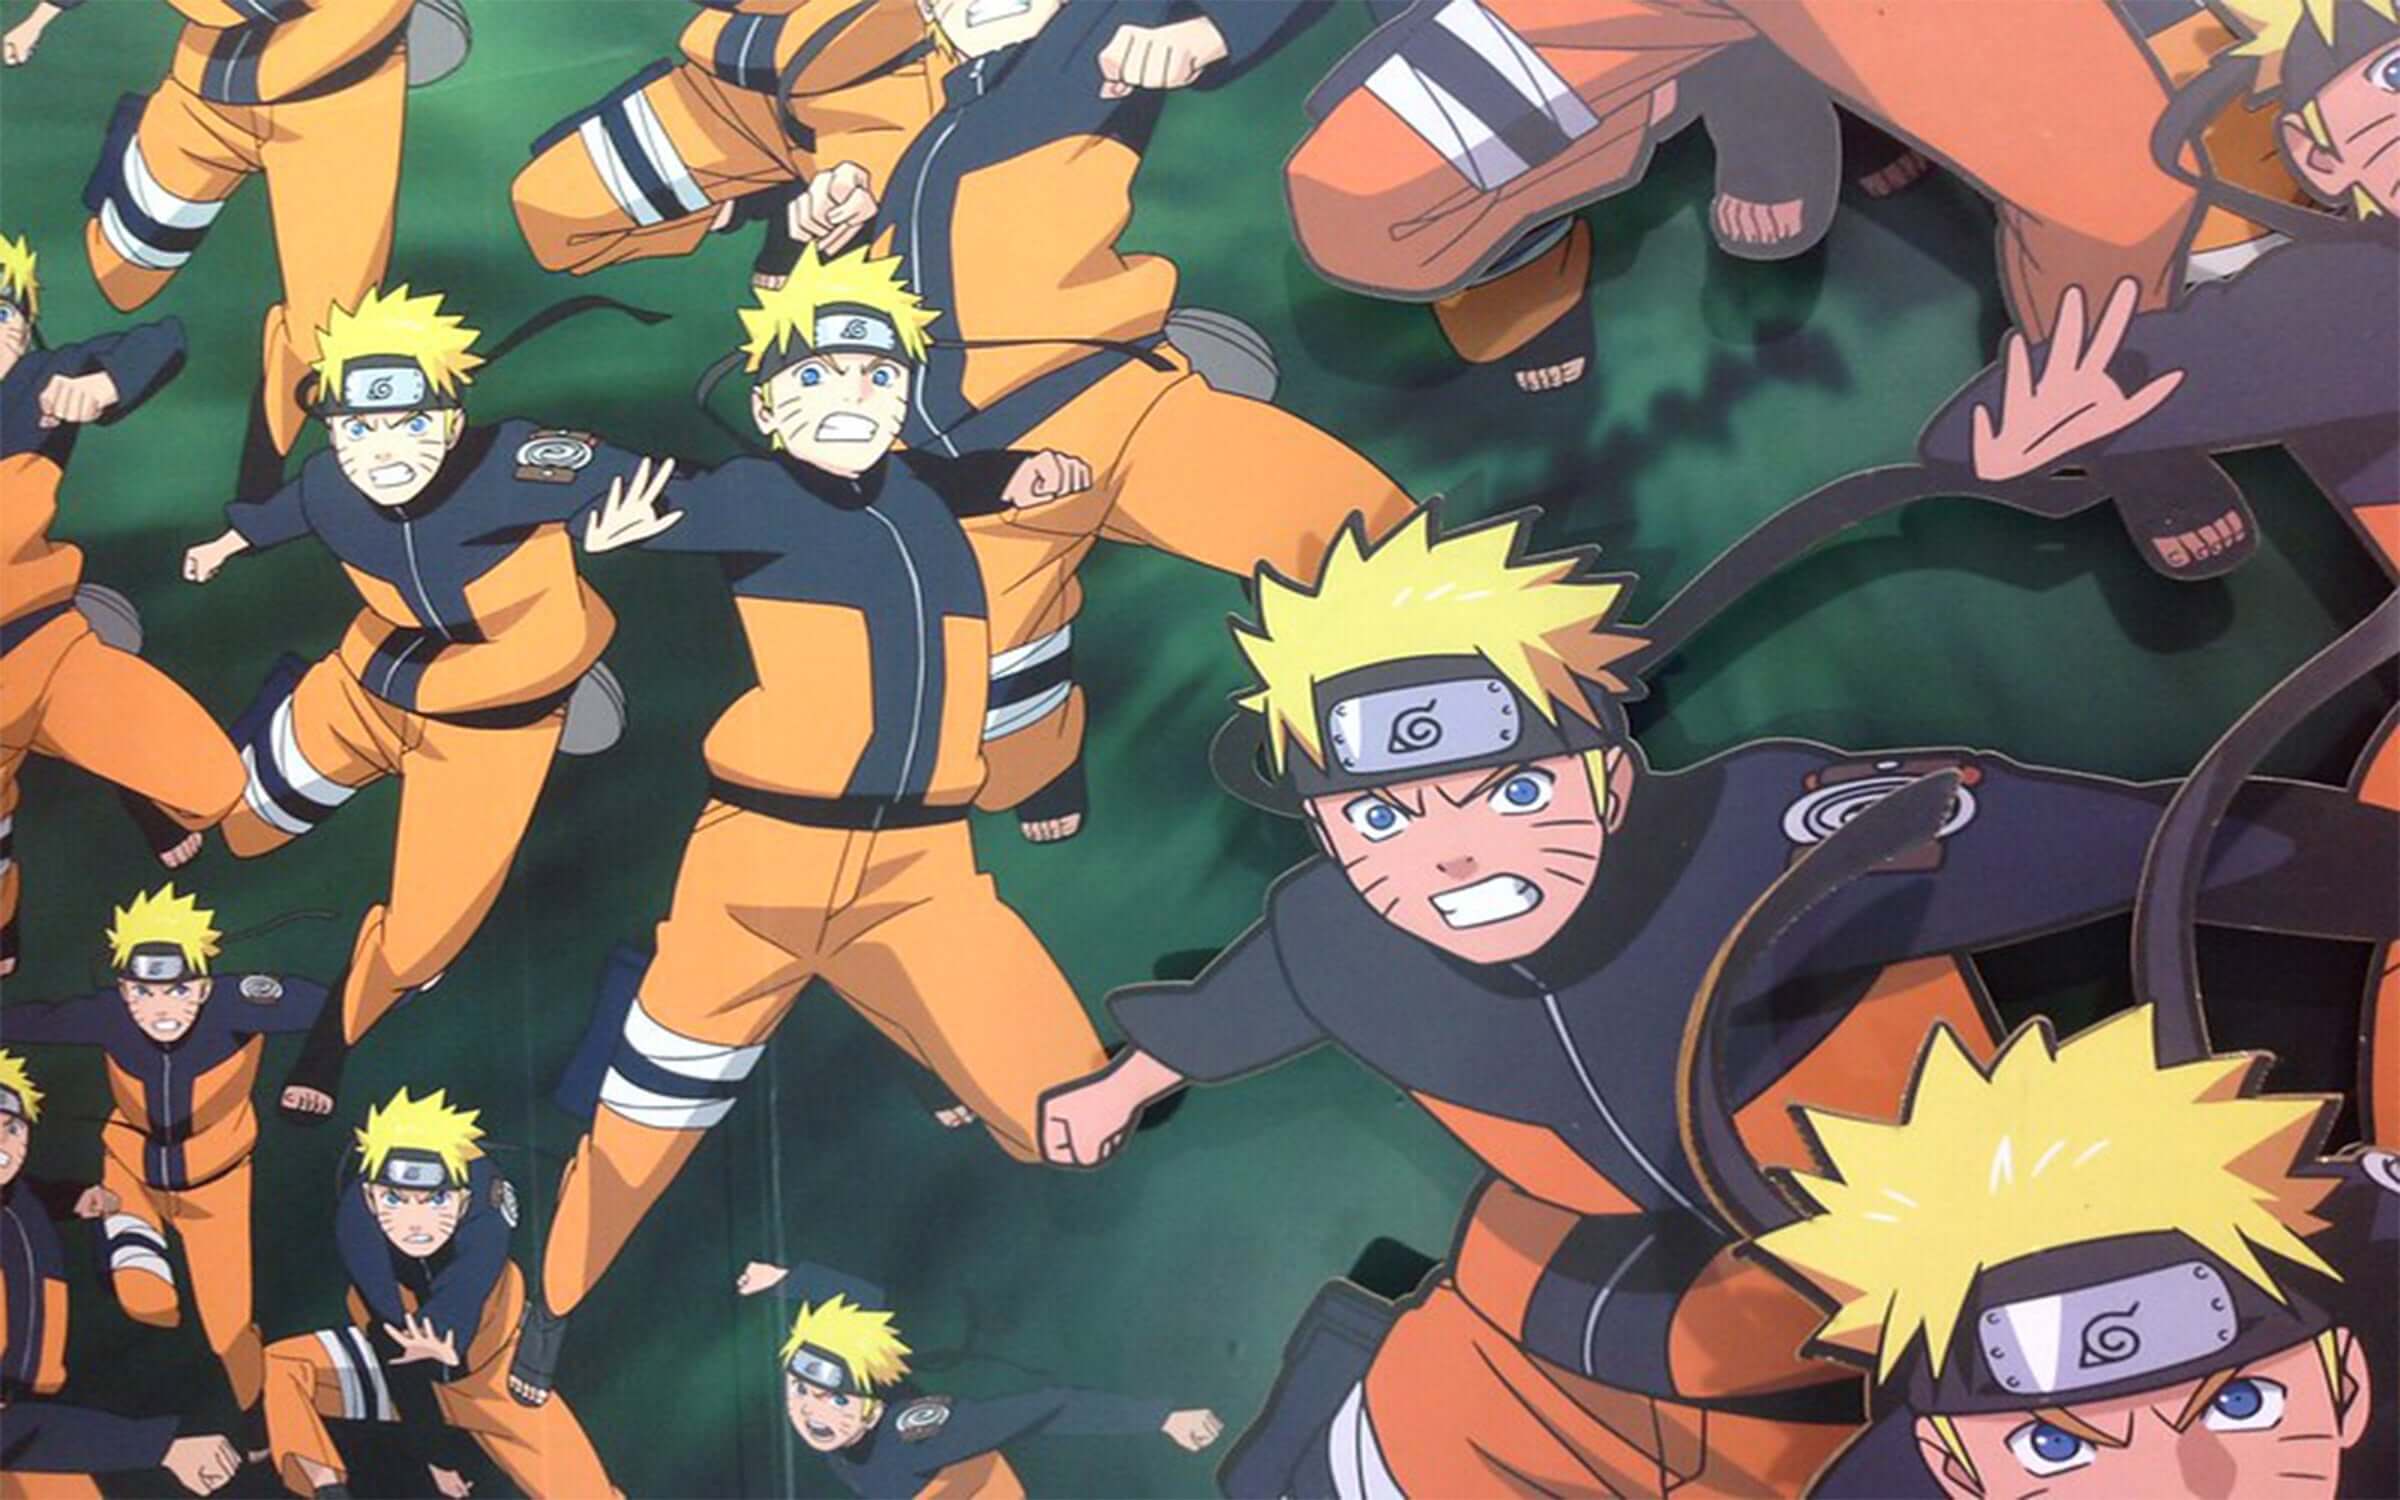 Naruto Explains Major Downside to Bringing Boruto Back to Life